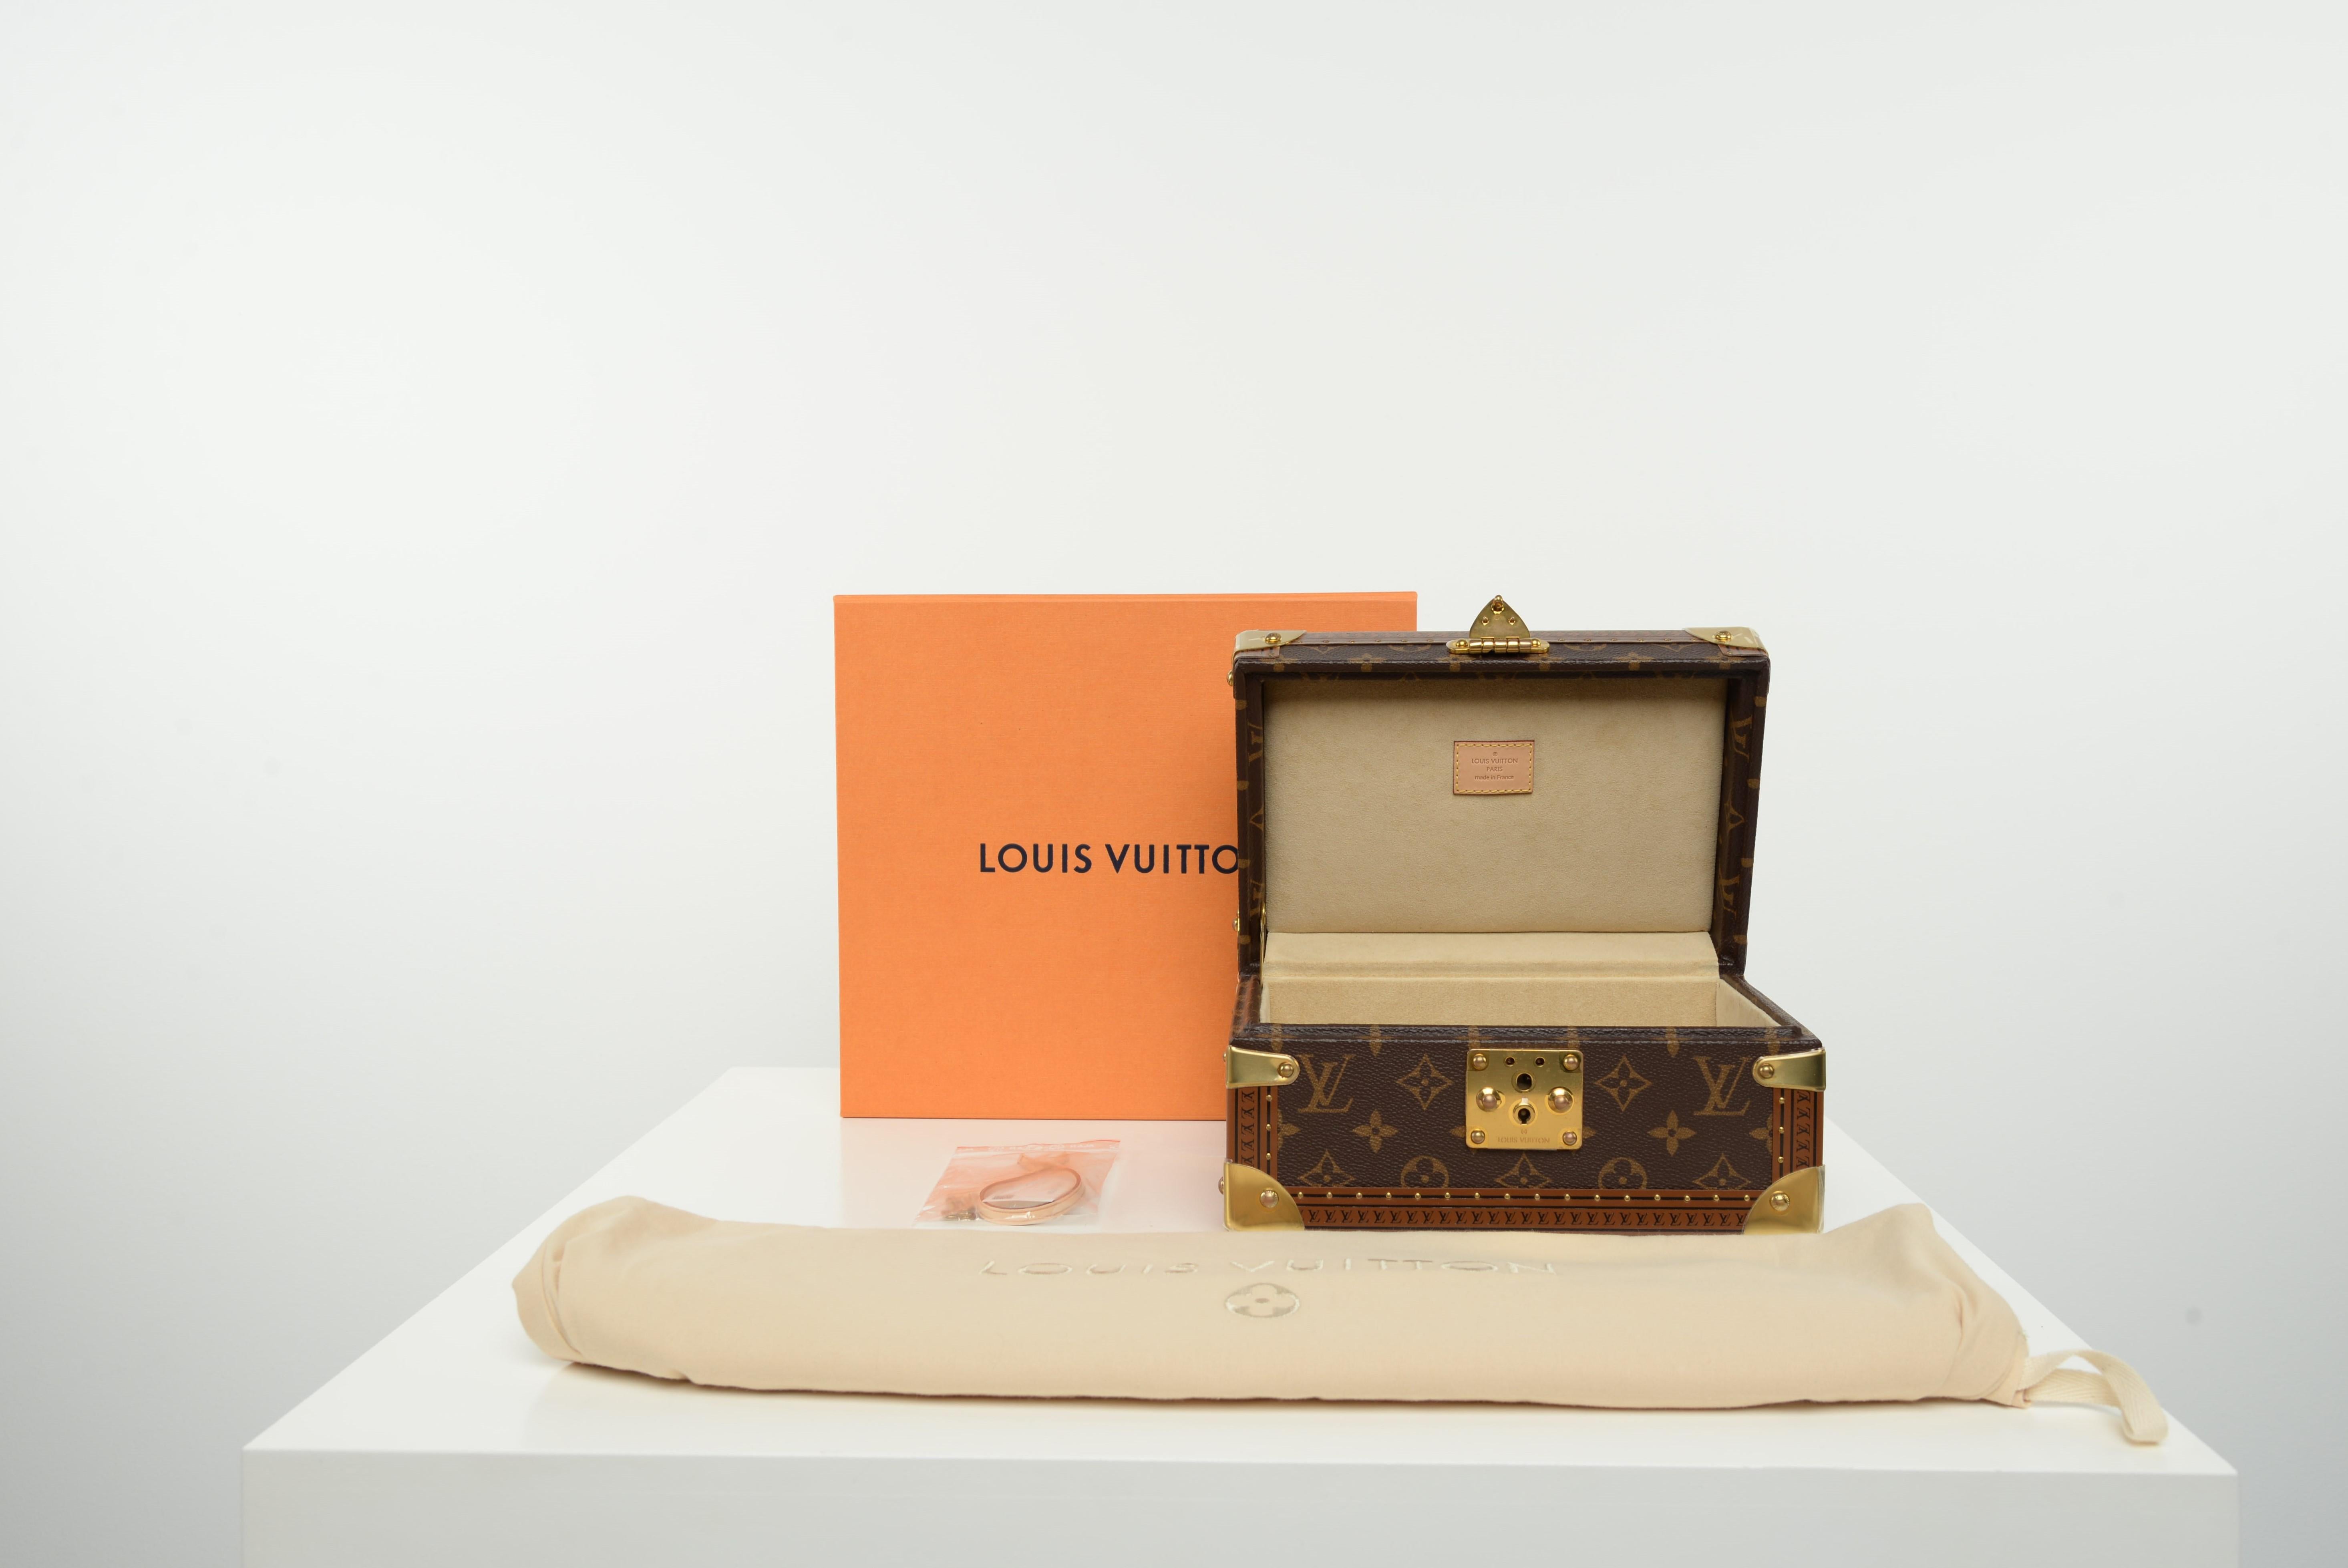 Sold at Auction: LOUIS VUITTON Monogram Coffret Polyvalent Jewelry Box